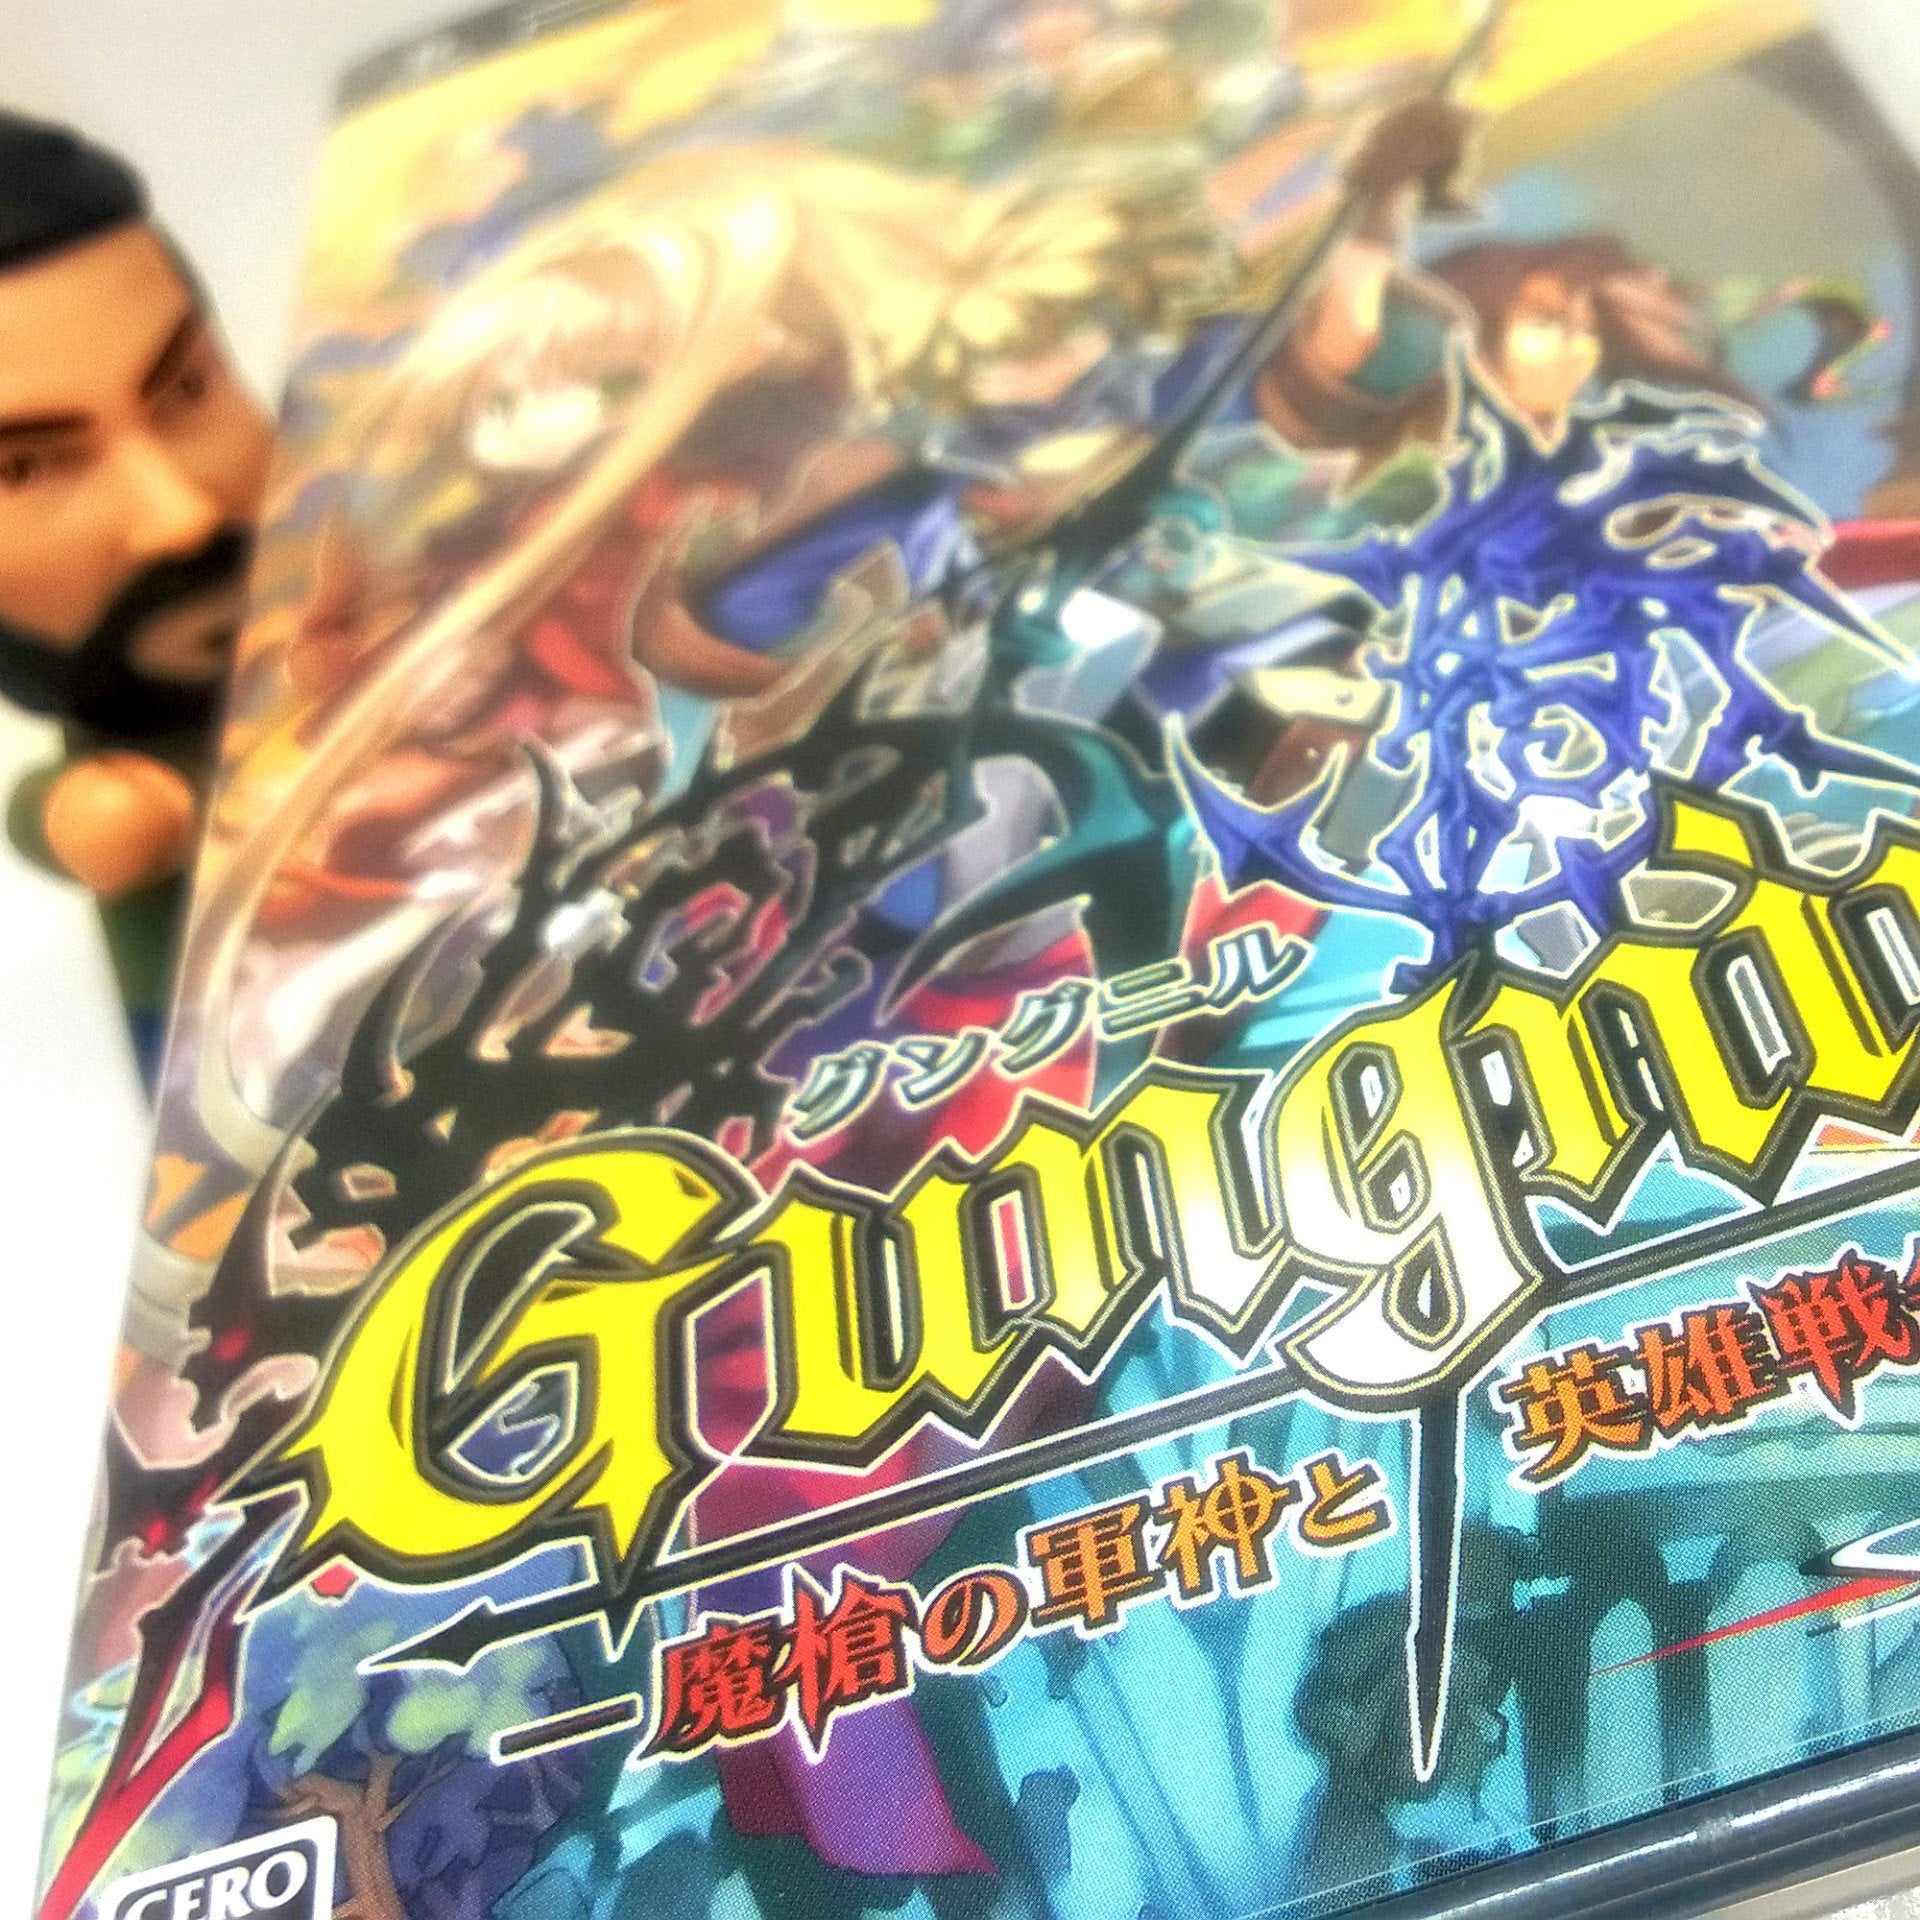 Gungnir: Mayari no Gunshin to Eiyuu Sensou Import PlayStation Portable PSP Game